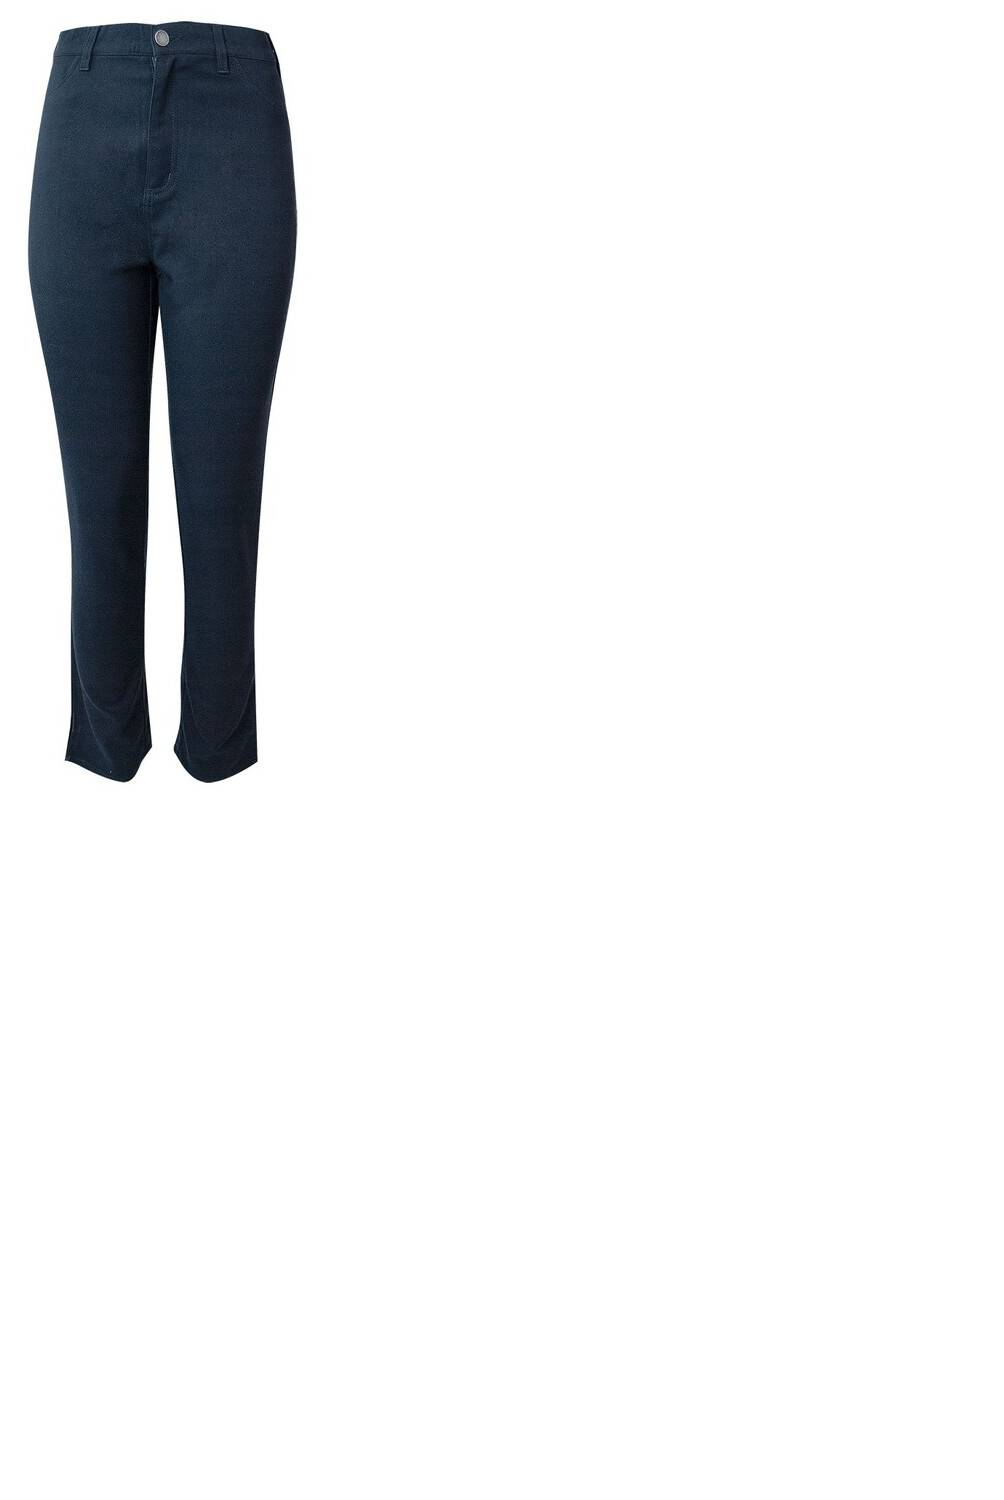 JAYSON - Pantalón Mujer Azul Leggins Pretina Alta